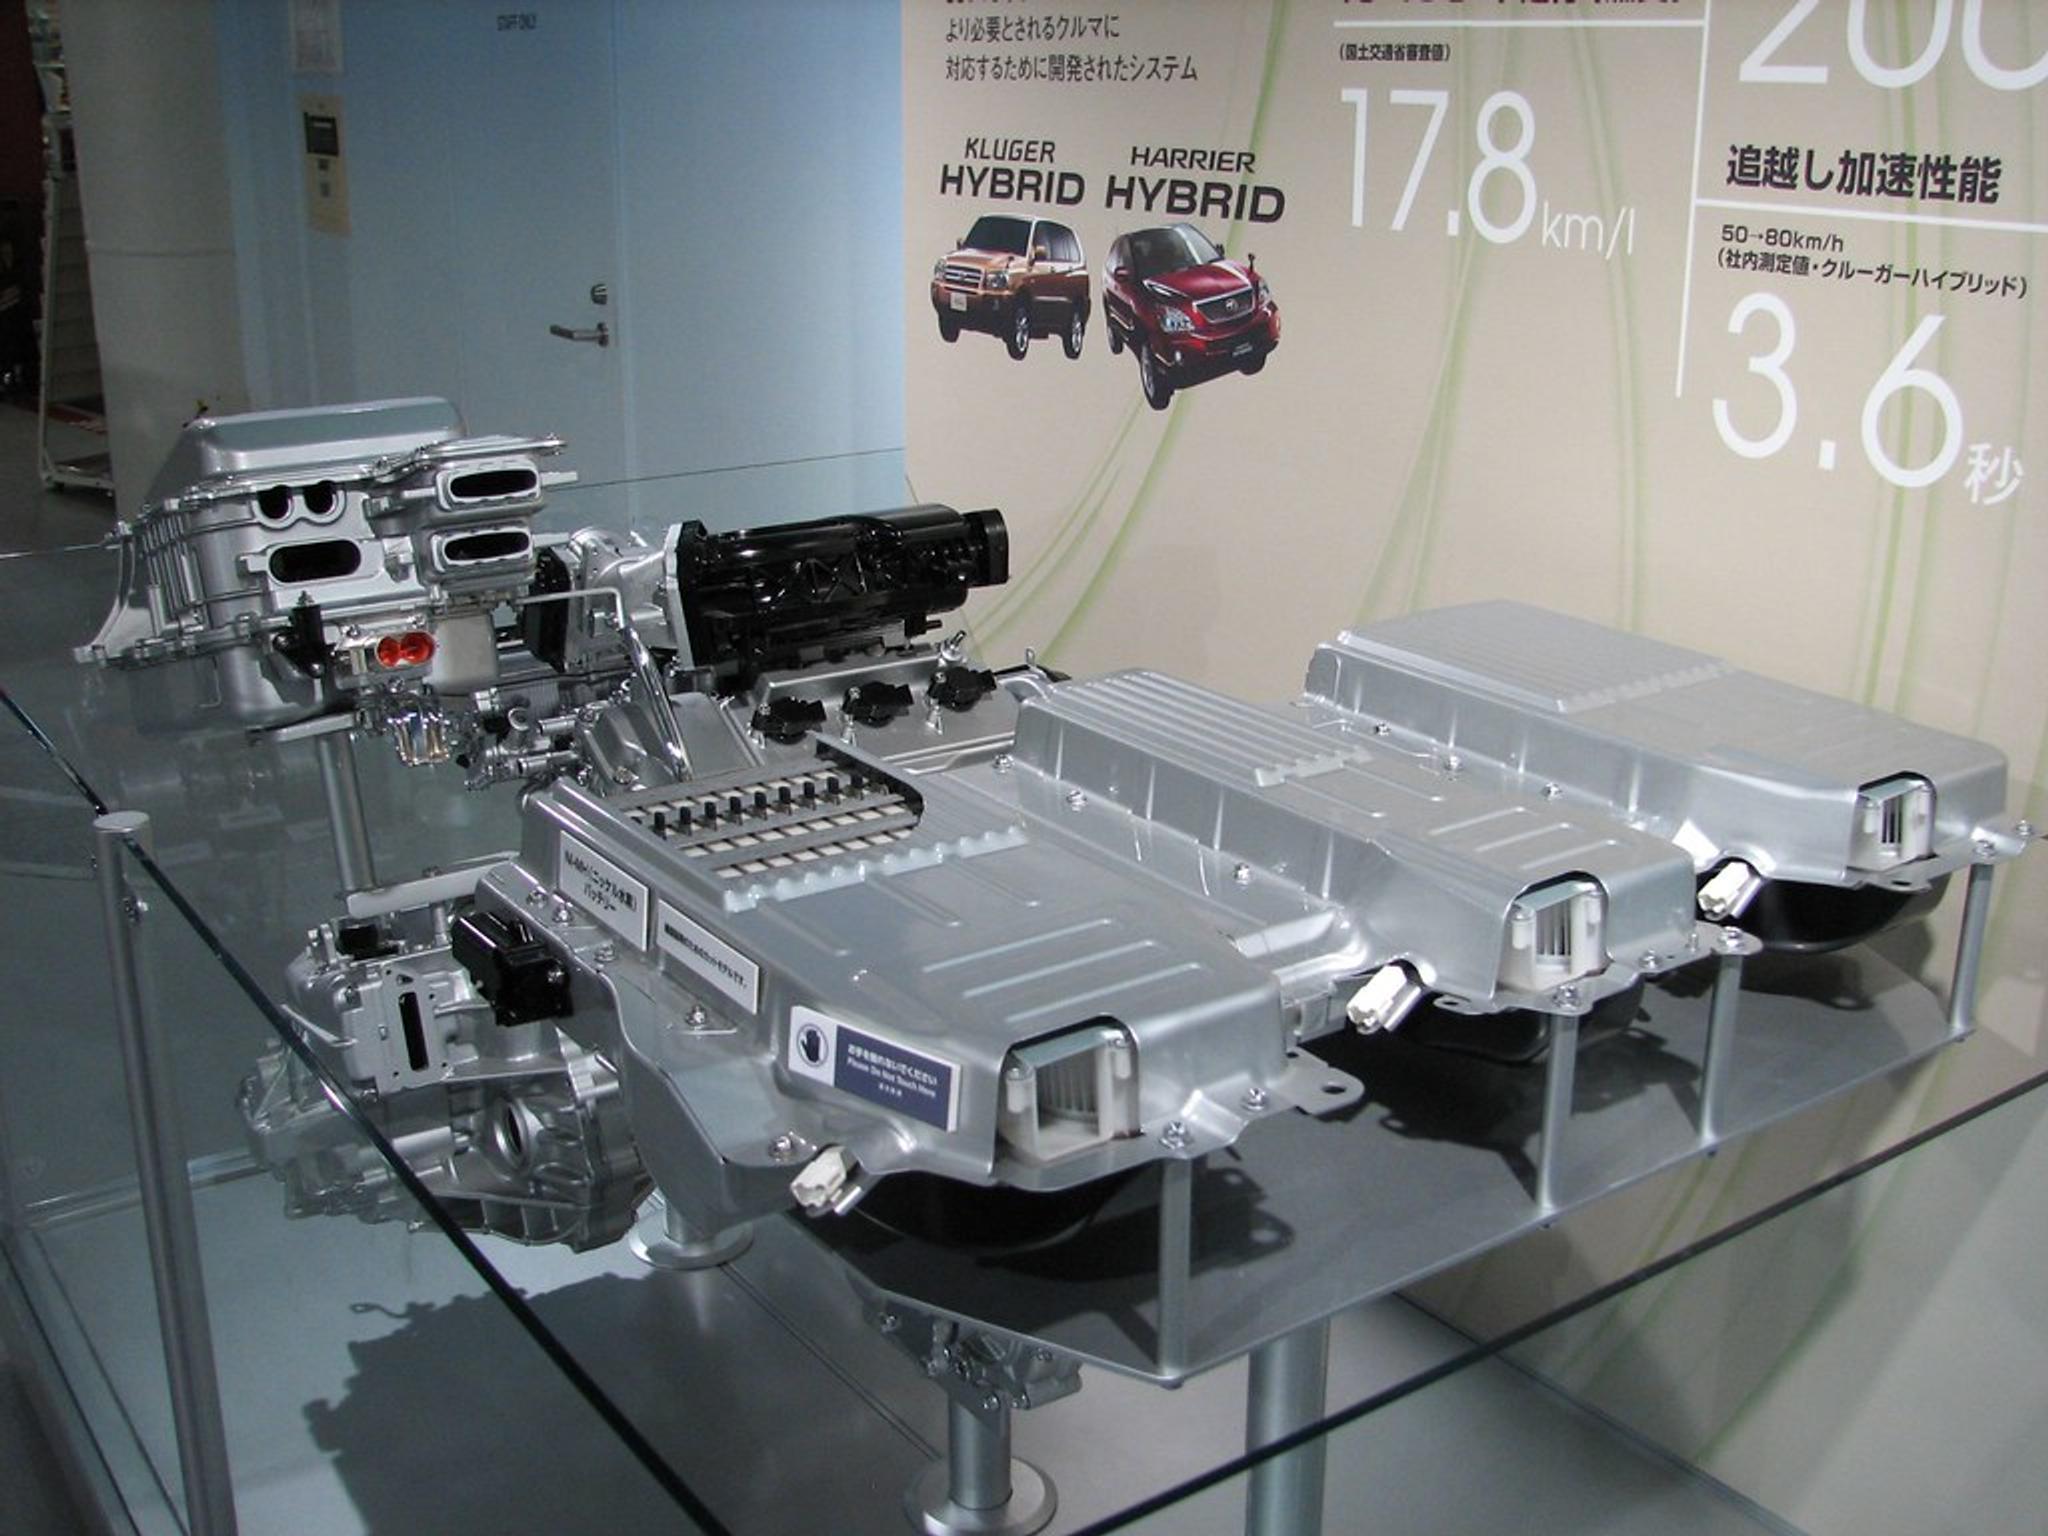 A hybrid system on display